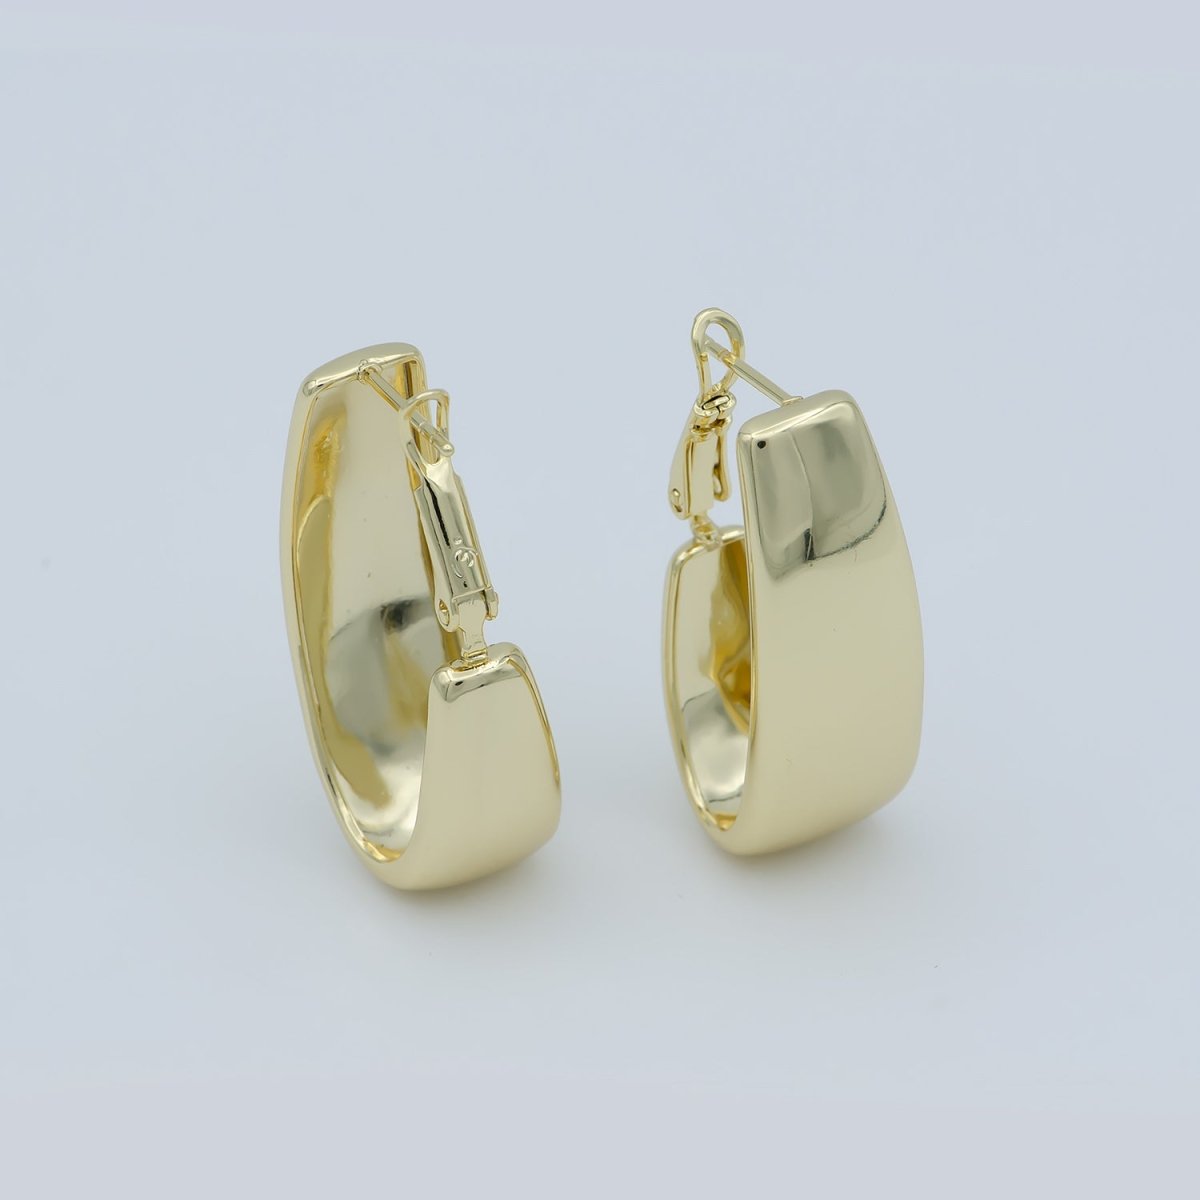 Golden Thin Huggies Earrings, Plain Gold Filled Geometric Formal/Casual Earring Jewelry P-257 - DLUXCA